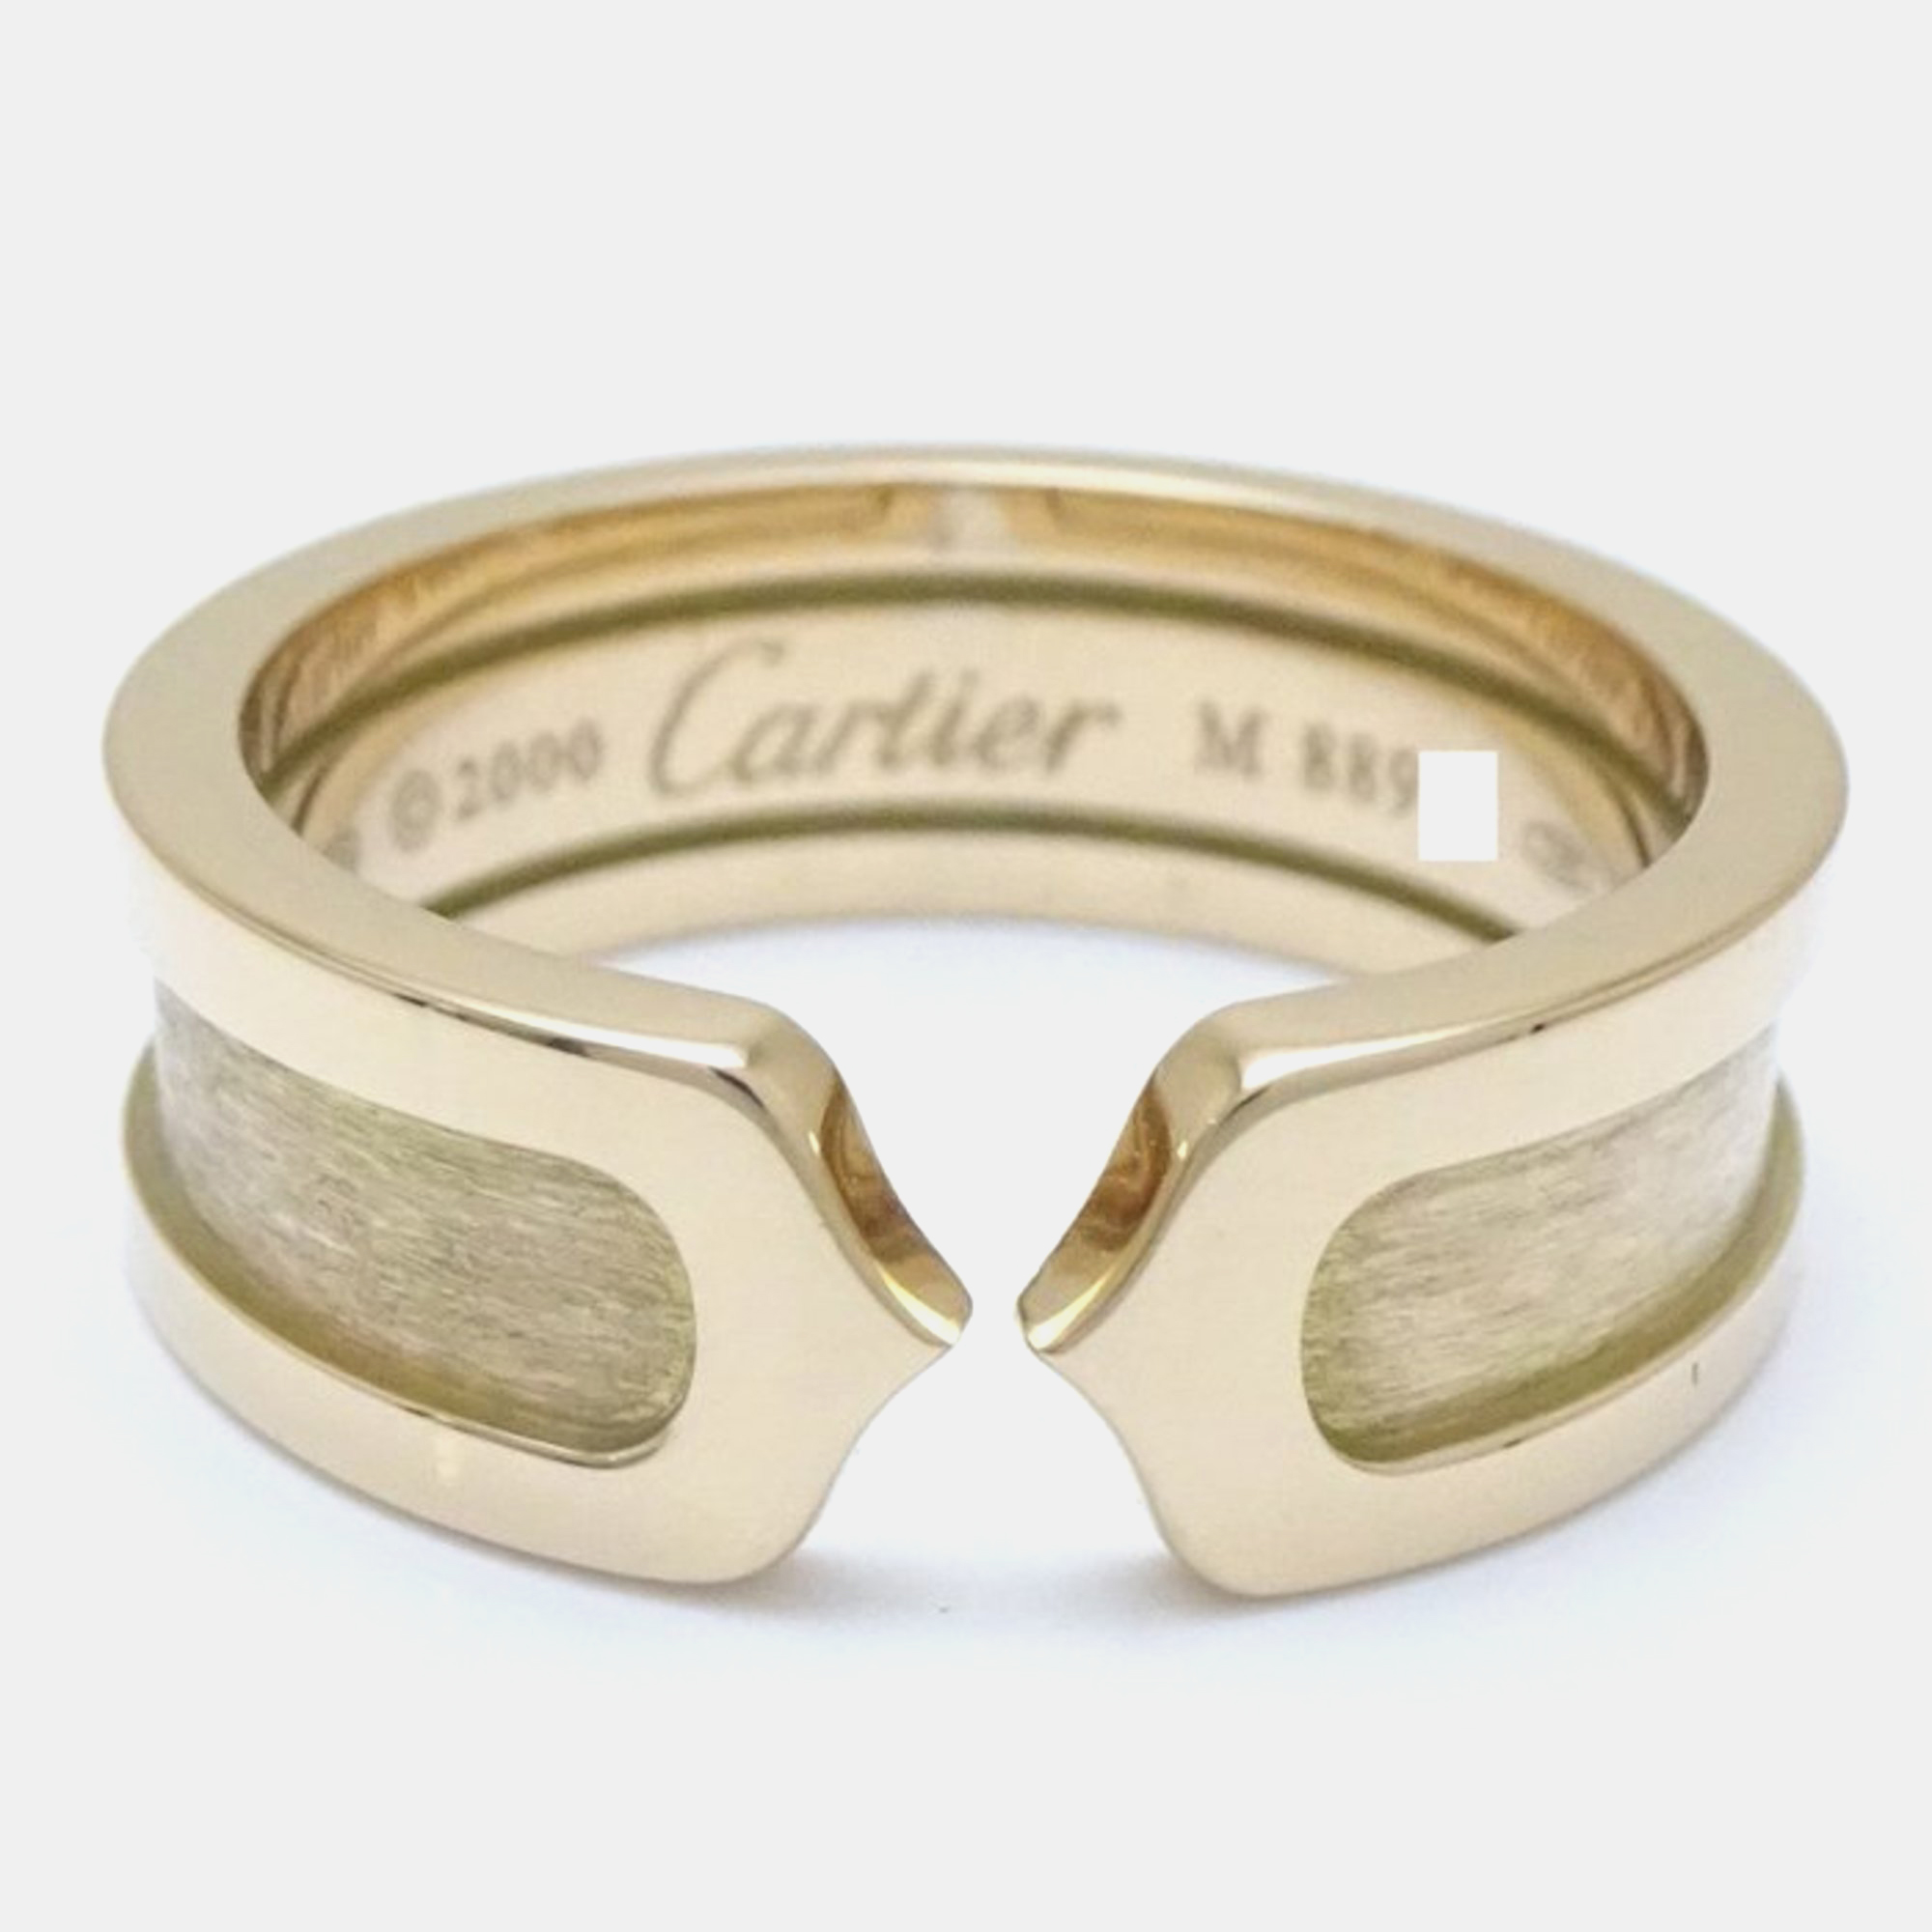 Cartier 18k yellow gold c de cartier band ring eu 52